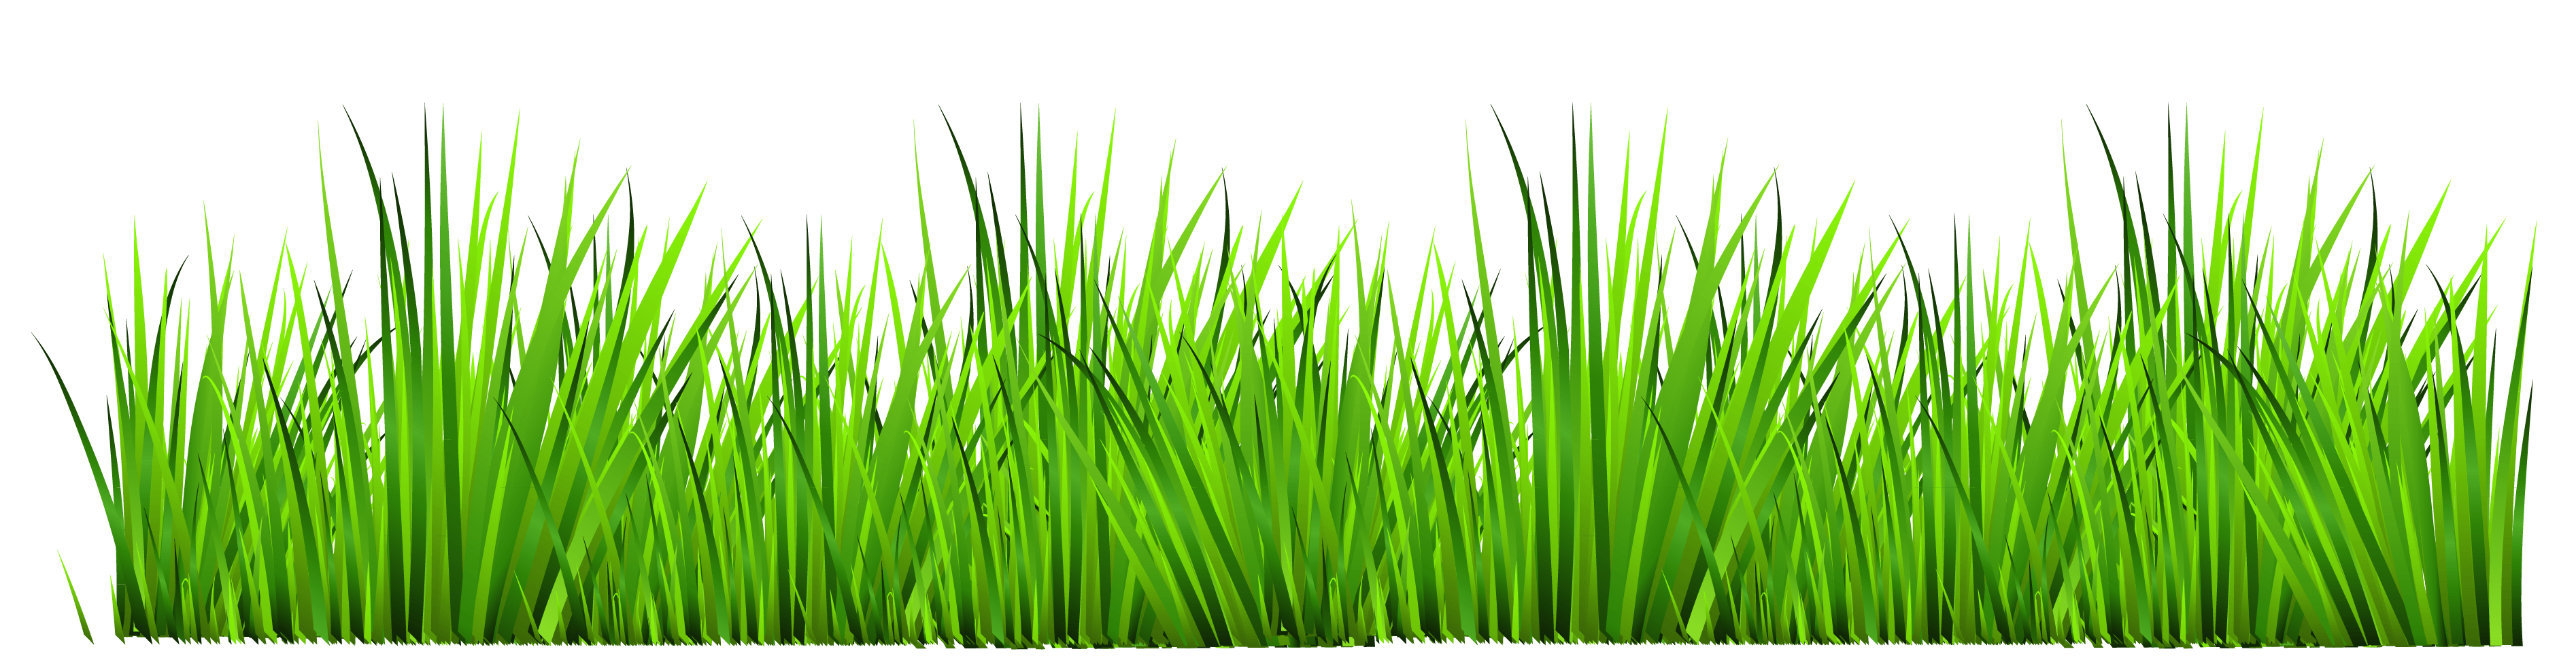 grass clipart row